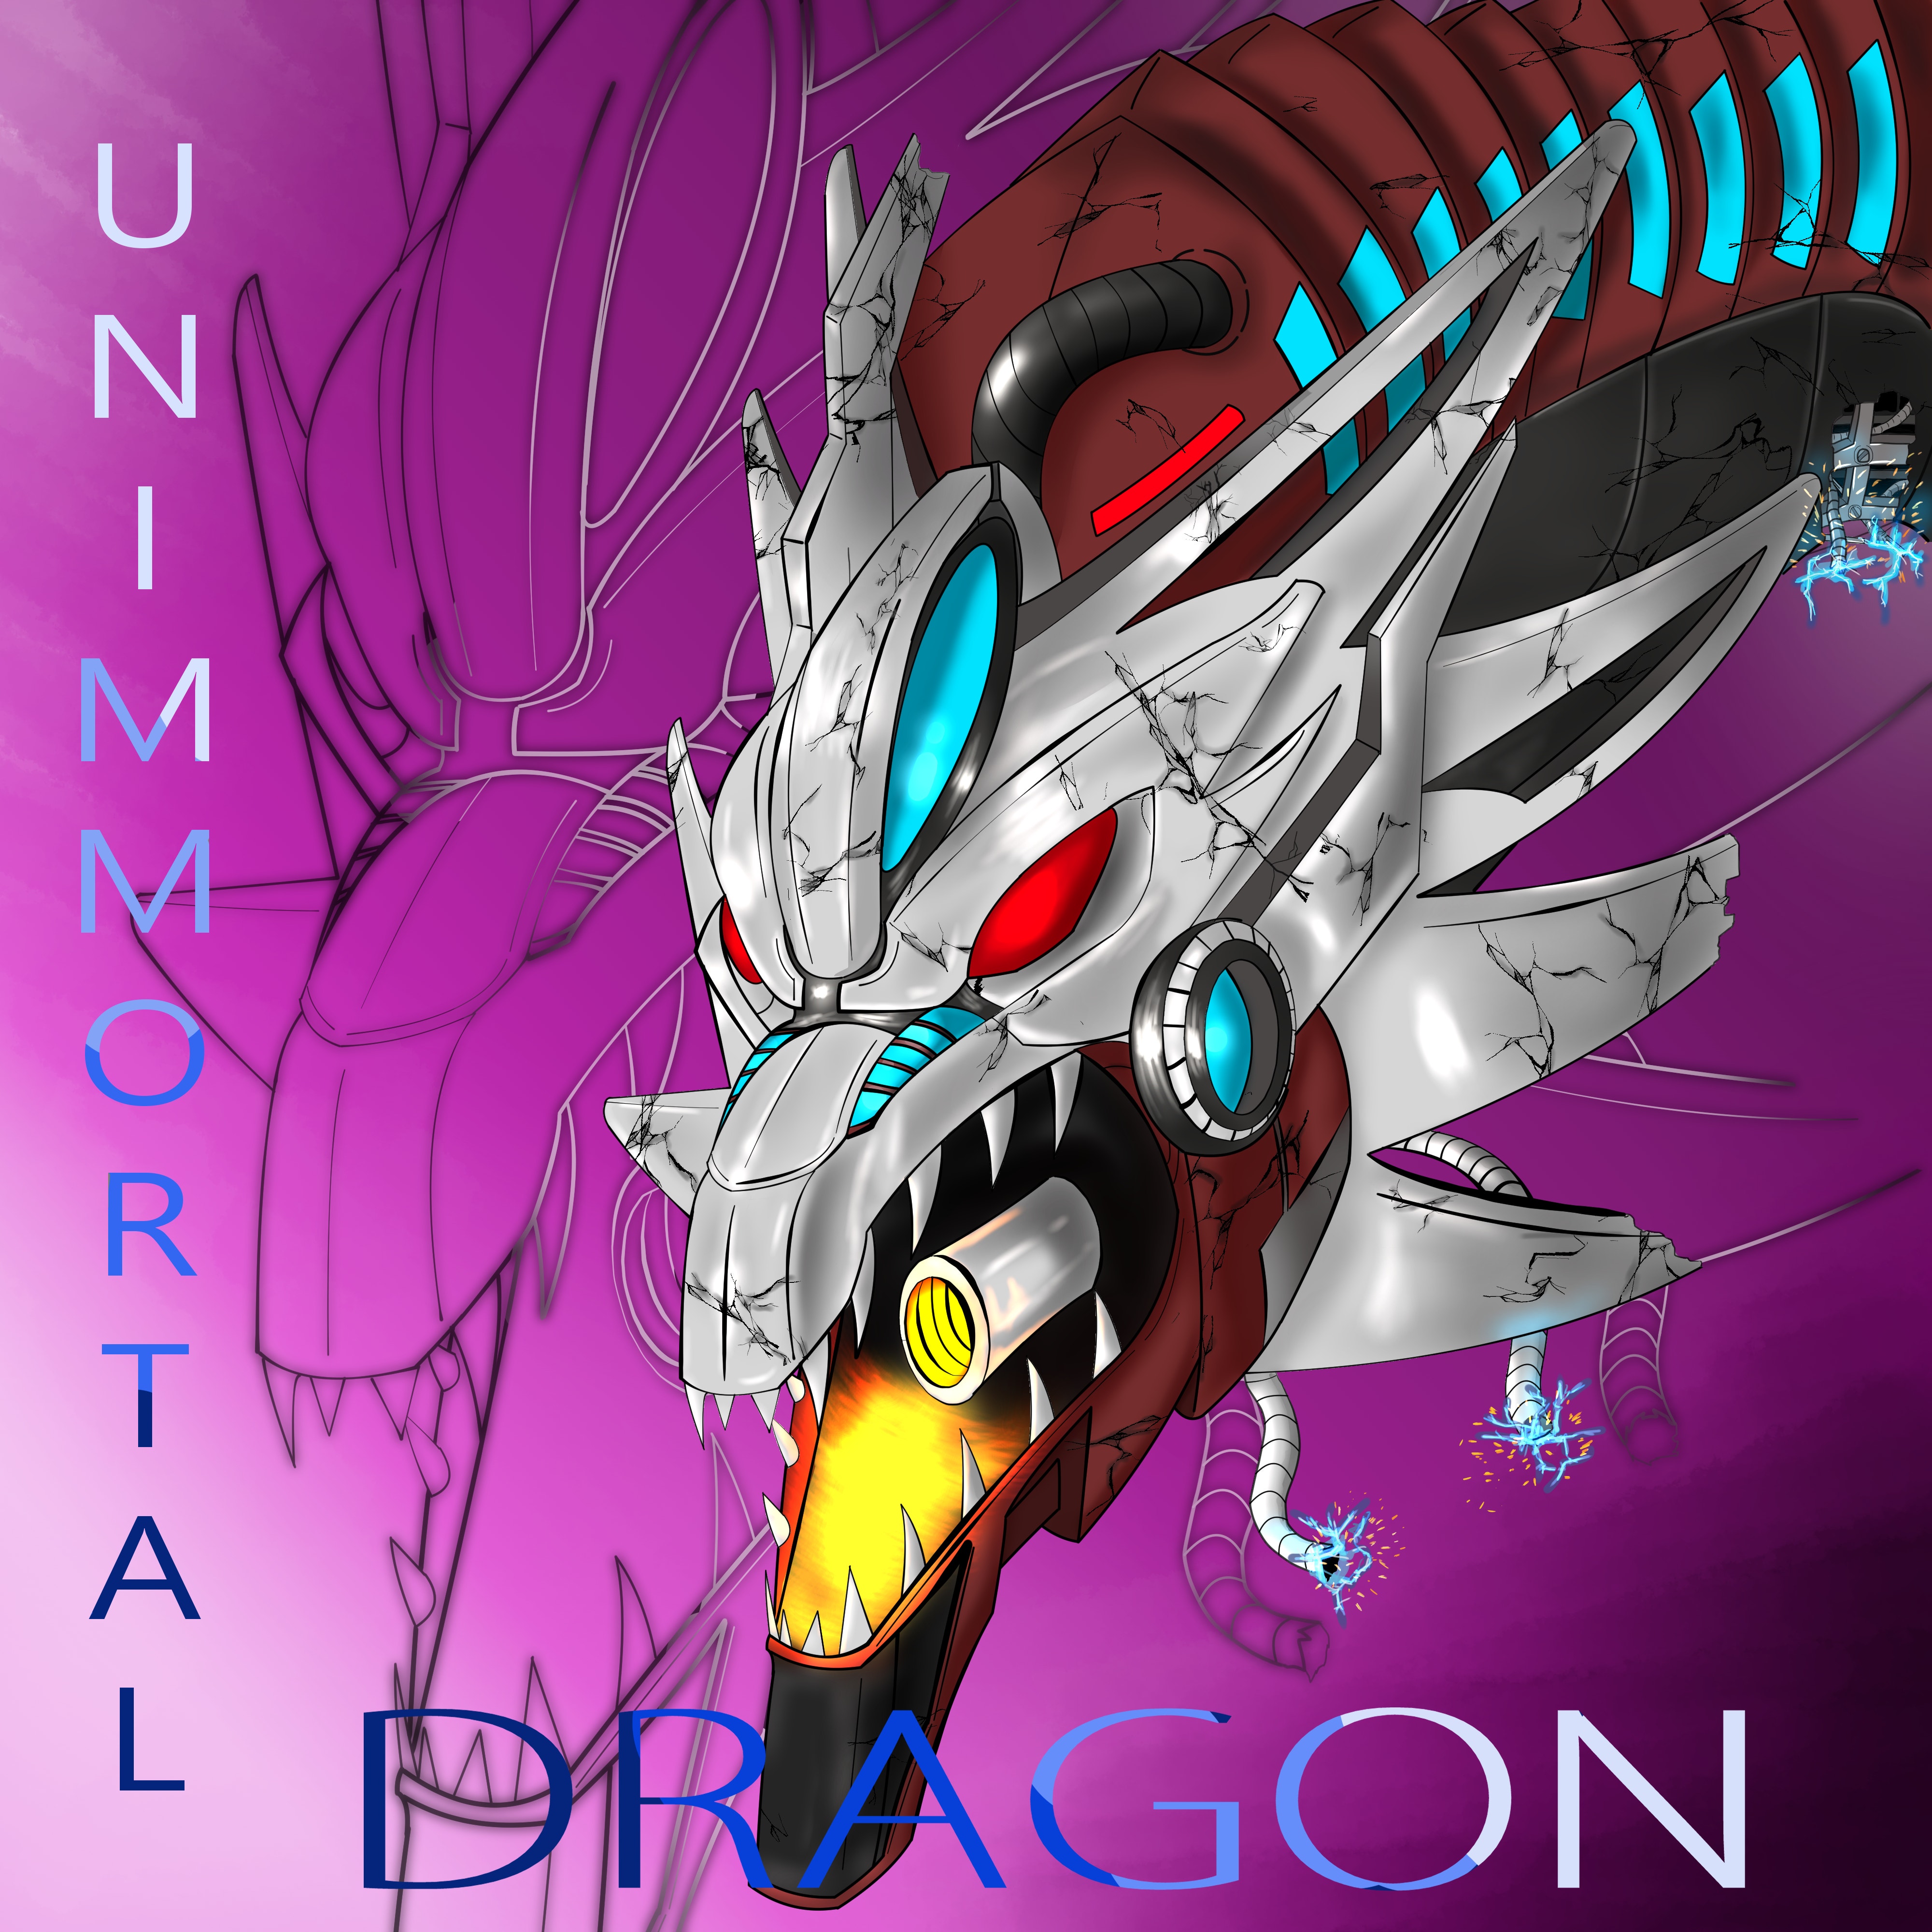 unimmortal dragon